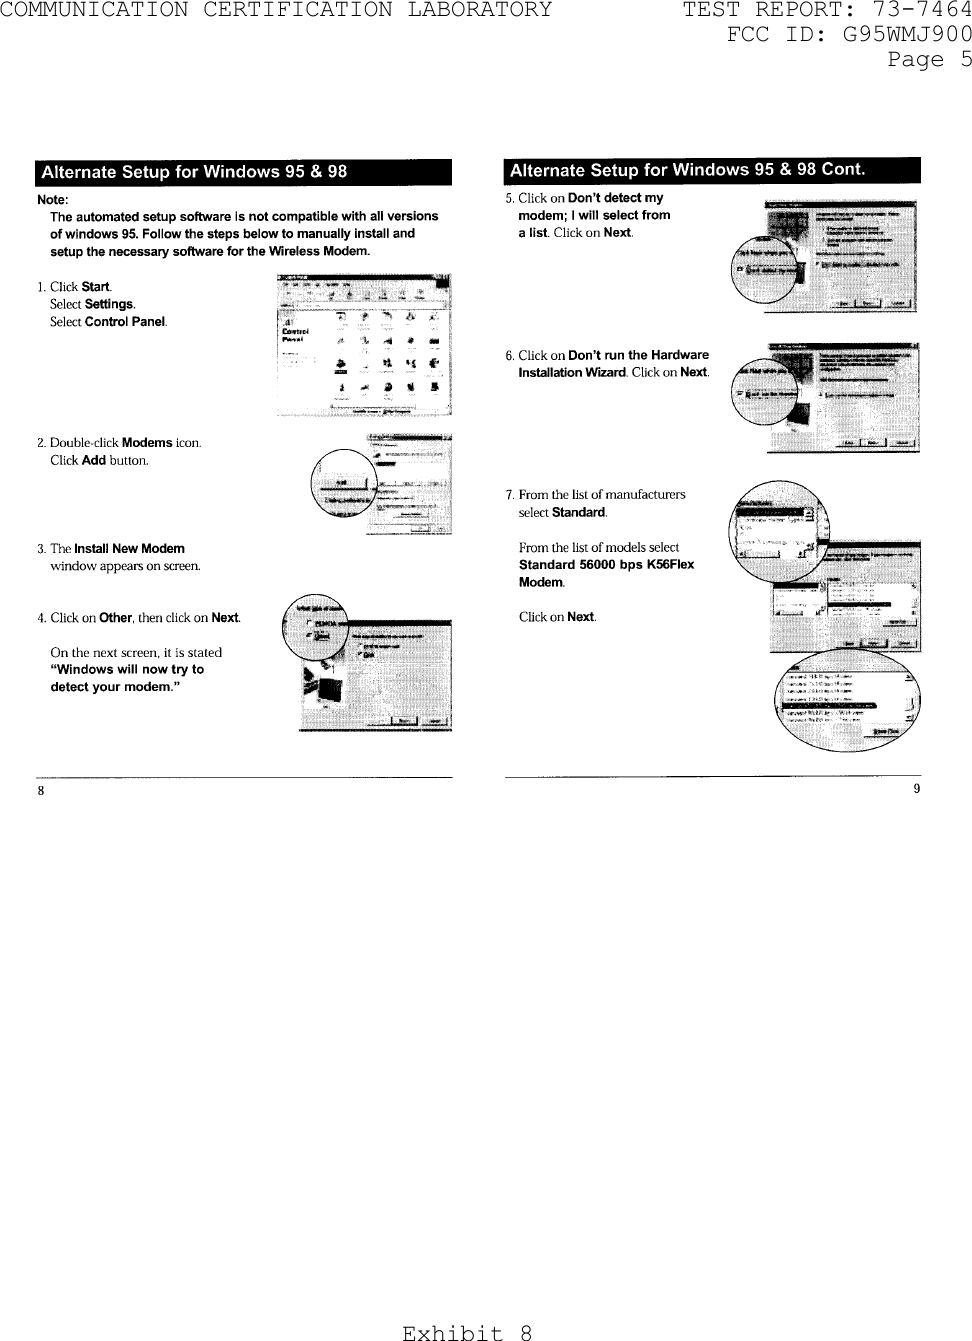 COMMUNICATION CERTIFICATION LABORATORY  TEST REPORT: 73-7464     FCC ID: G95WMJ900   Page 5 Exhibit 8    